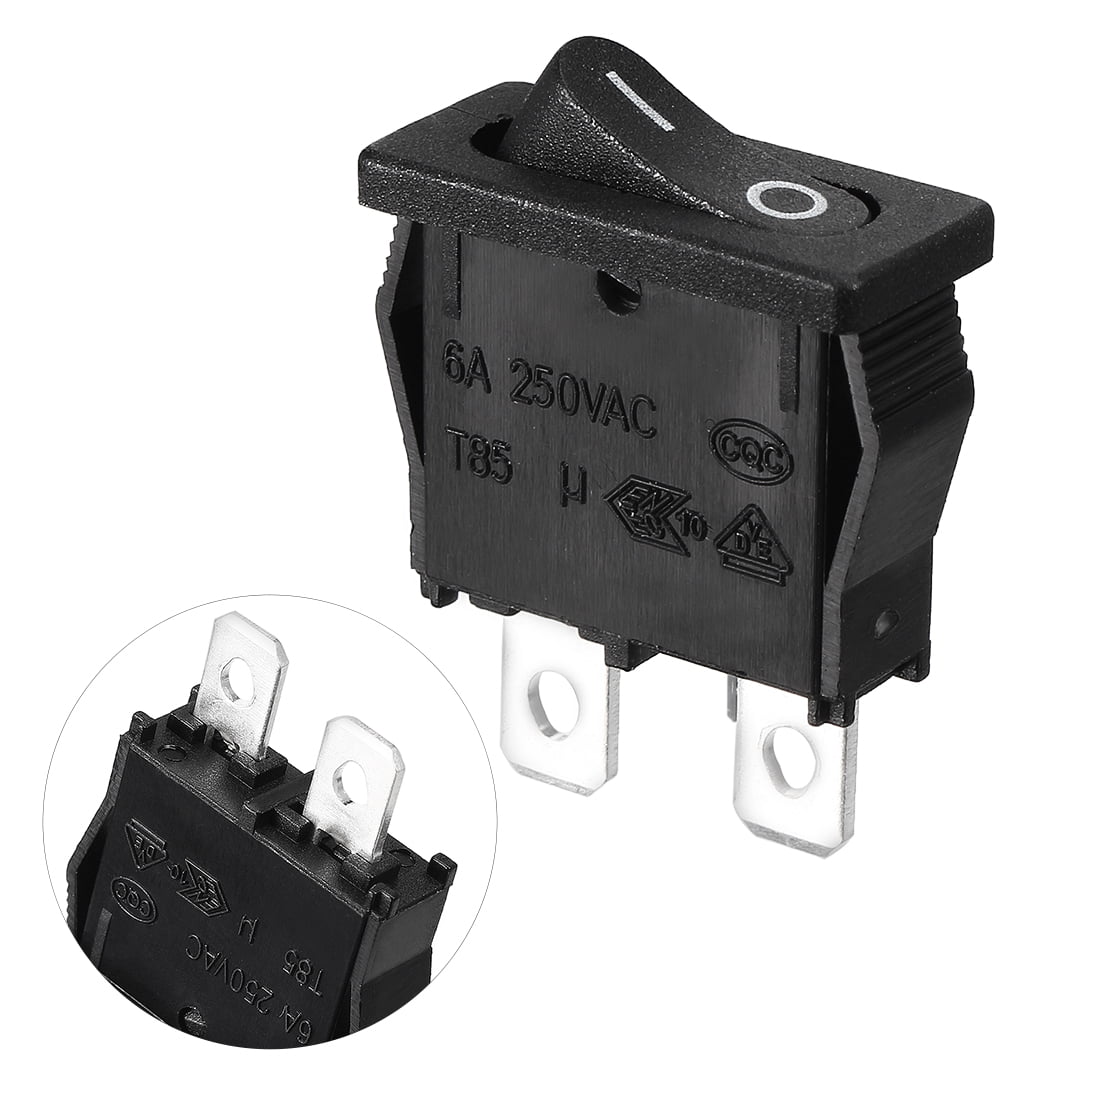 5 pcs SPDT On/Off/On Mini Black 3 Pin Rocker Switch AC 6A/250V 10A/125V IJ_BP n